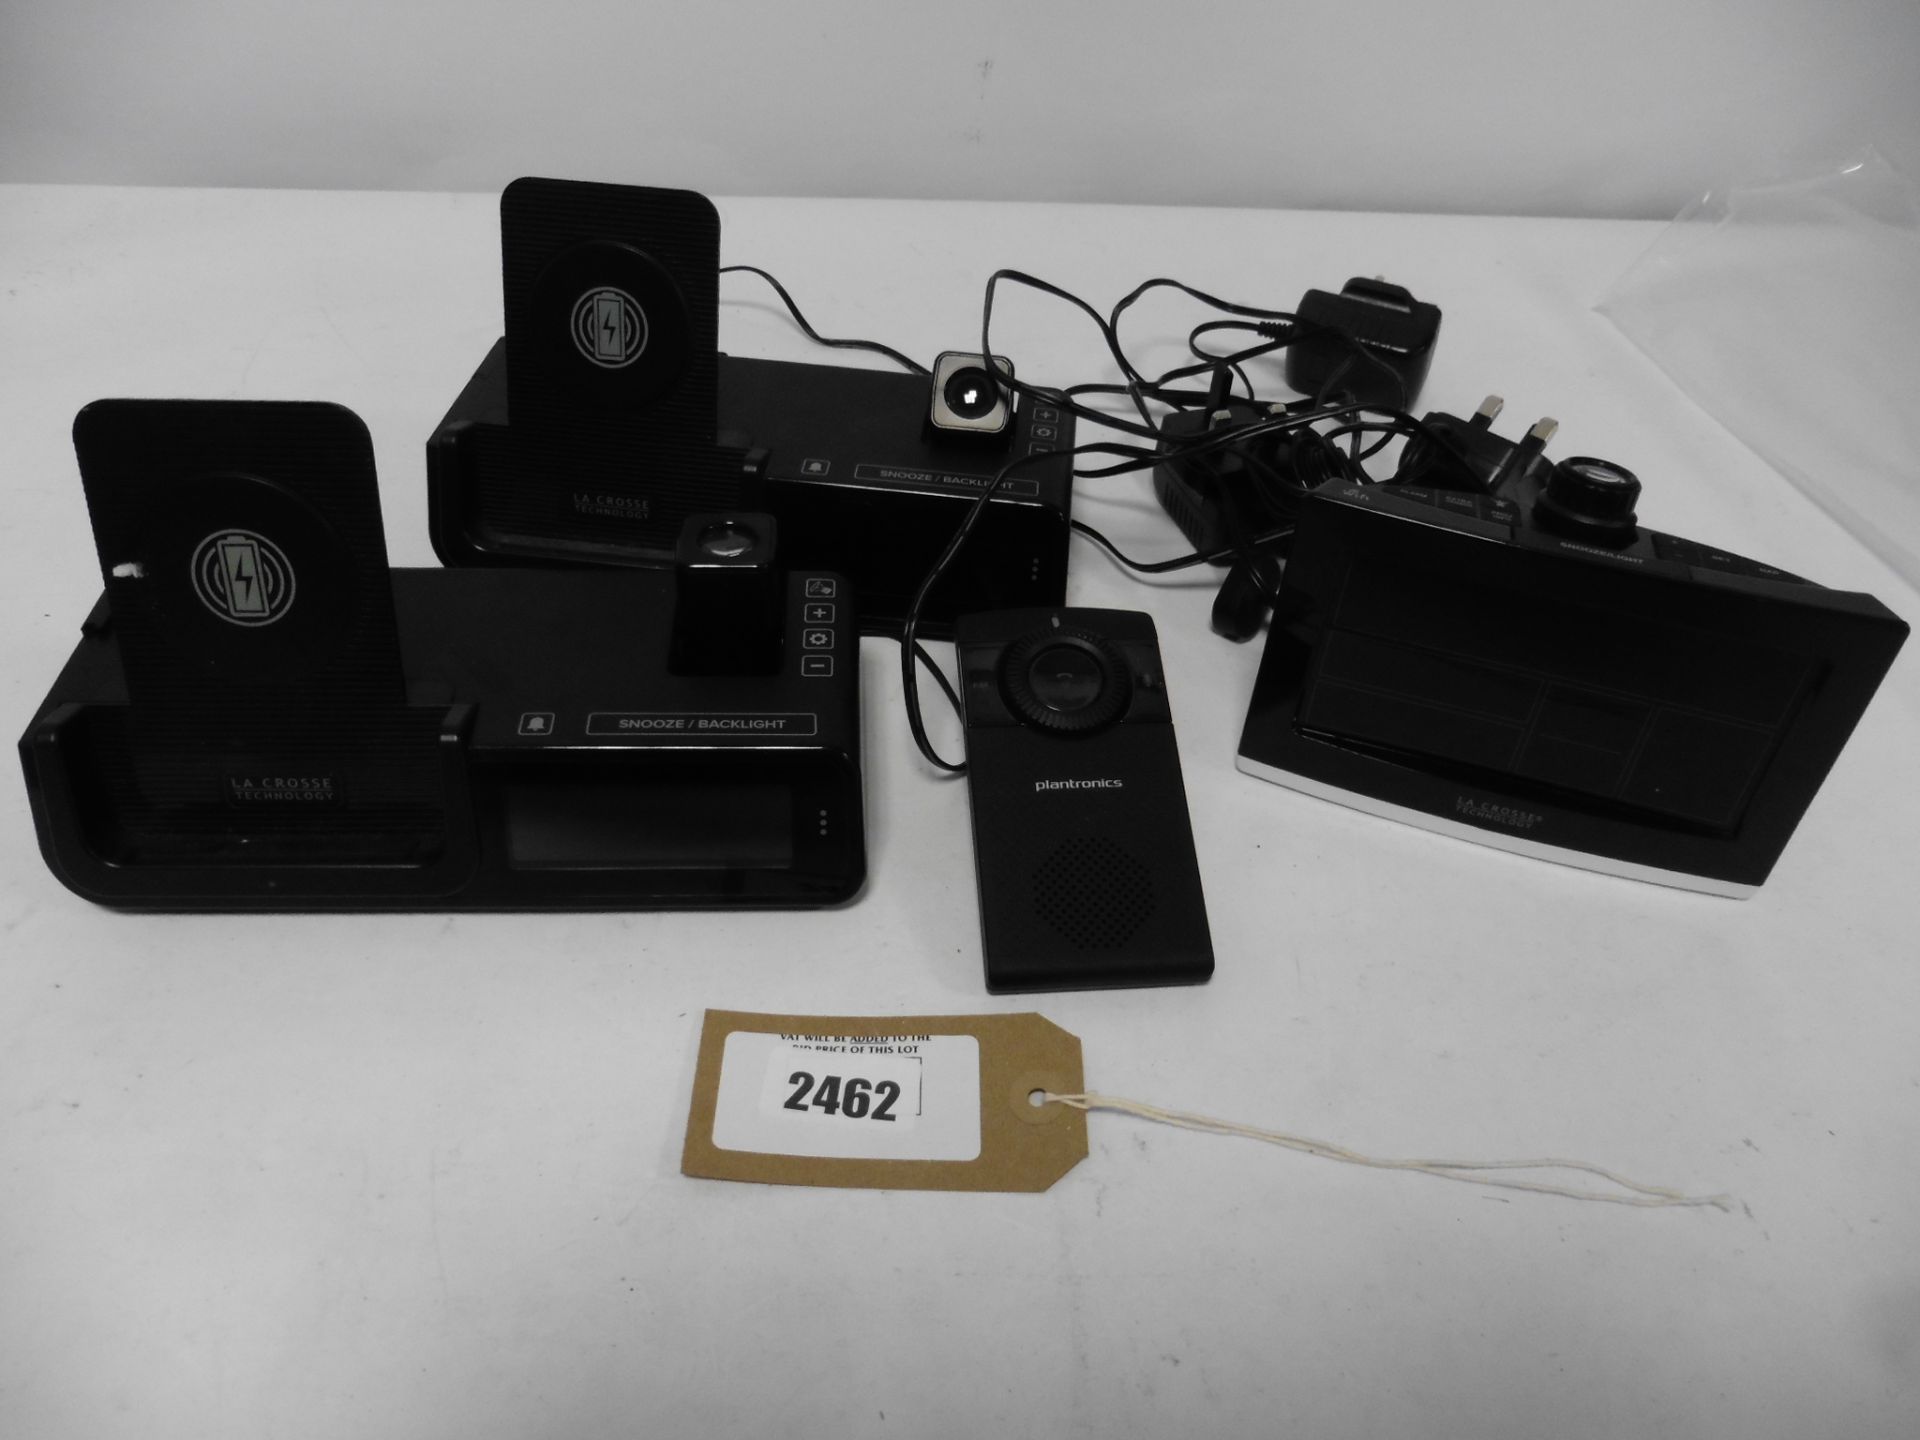 3 various projection alarm clocks and a Plantonics K100 speaker